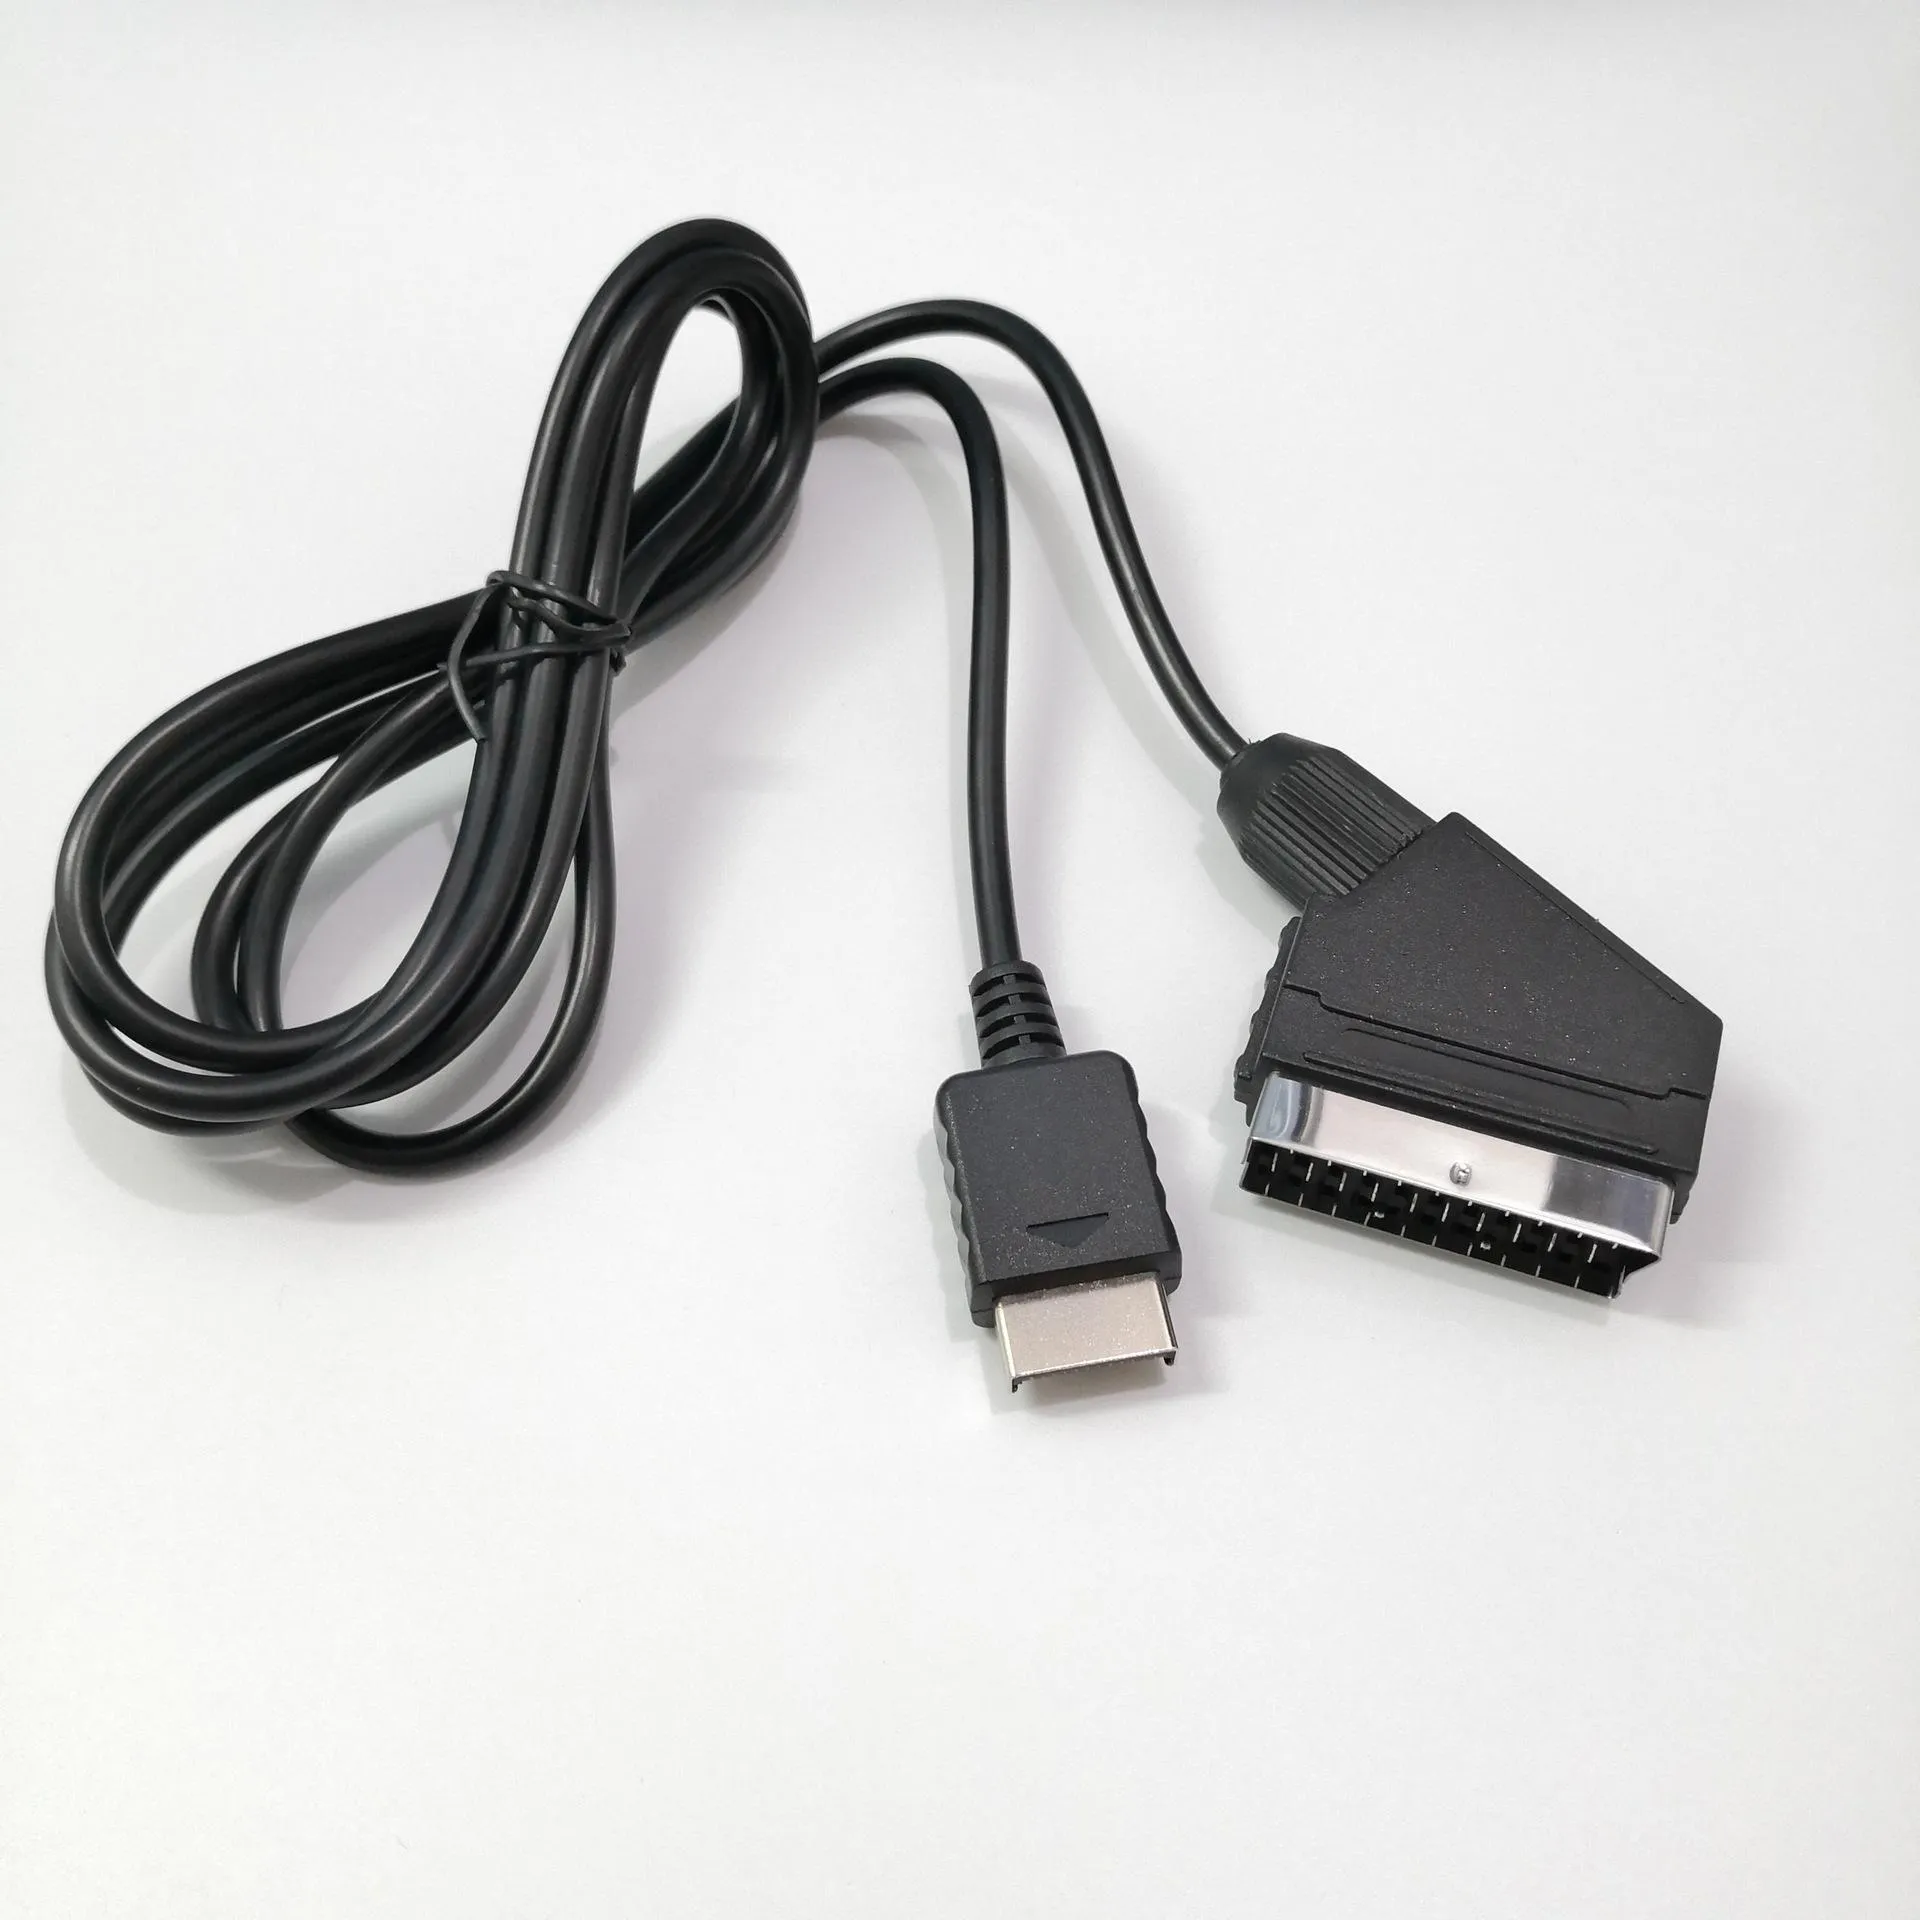 PAL / NTSCコンソールのためのSony PlayStation PS2 PS3 TV AVリード交換接続コードワイヤー用1.8M RGB Scartケーブル